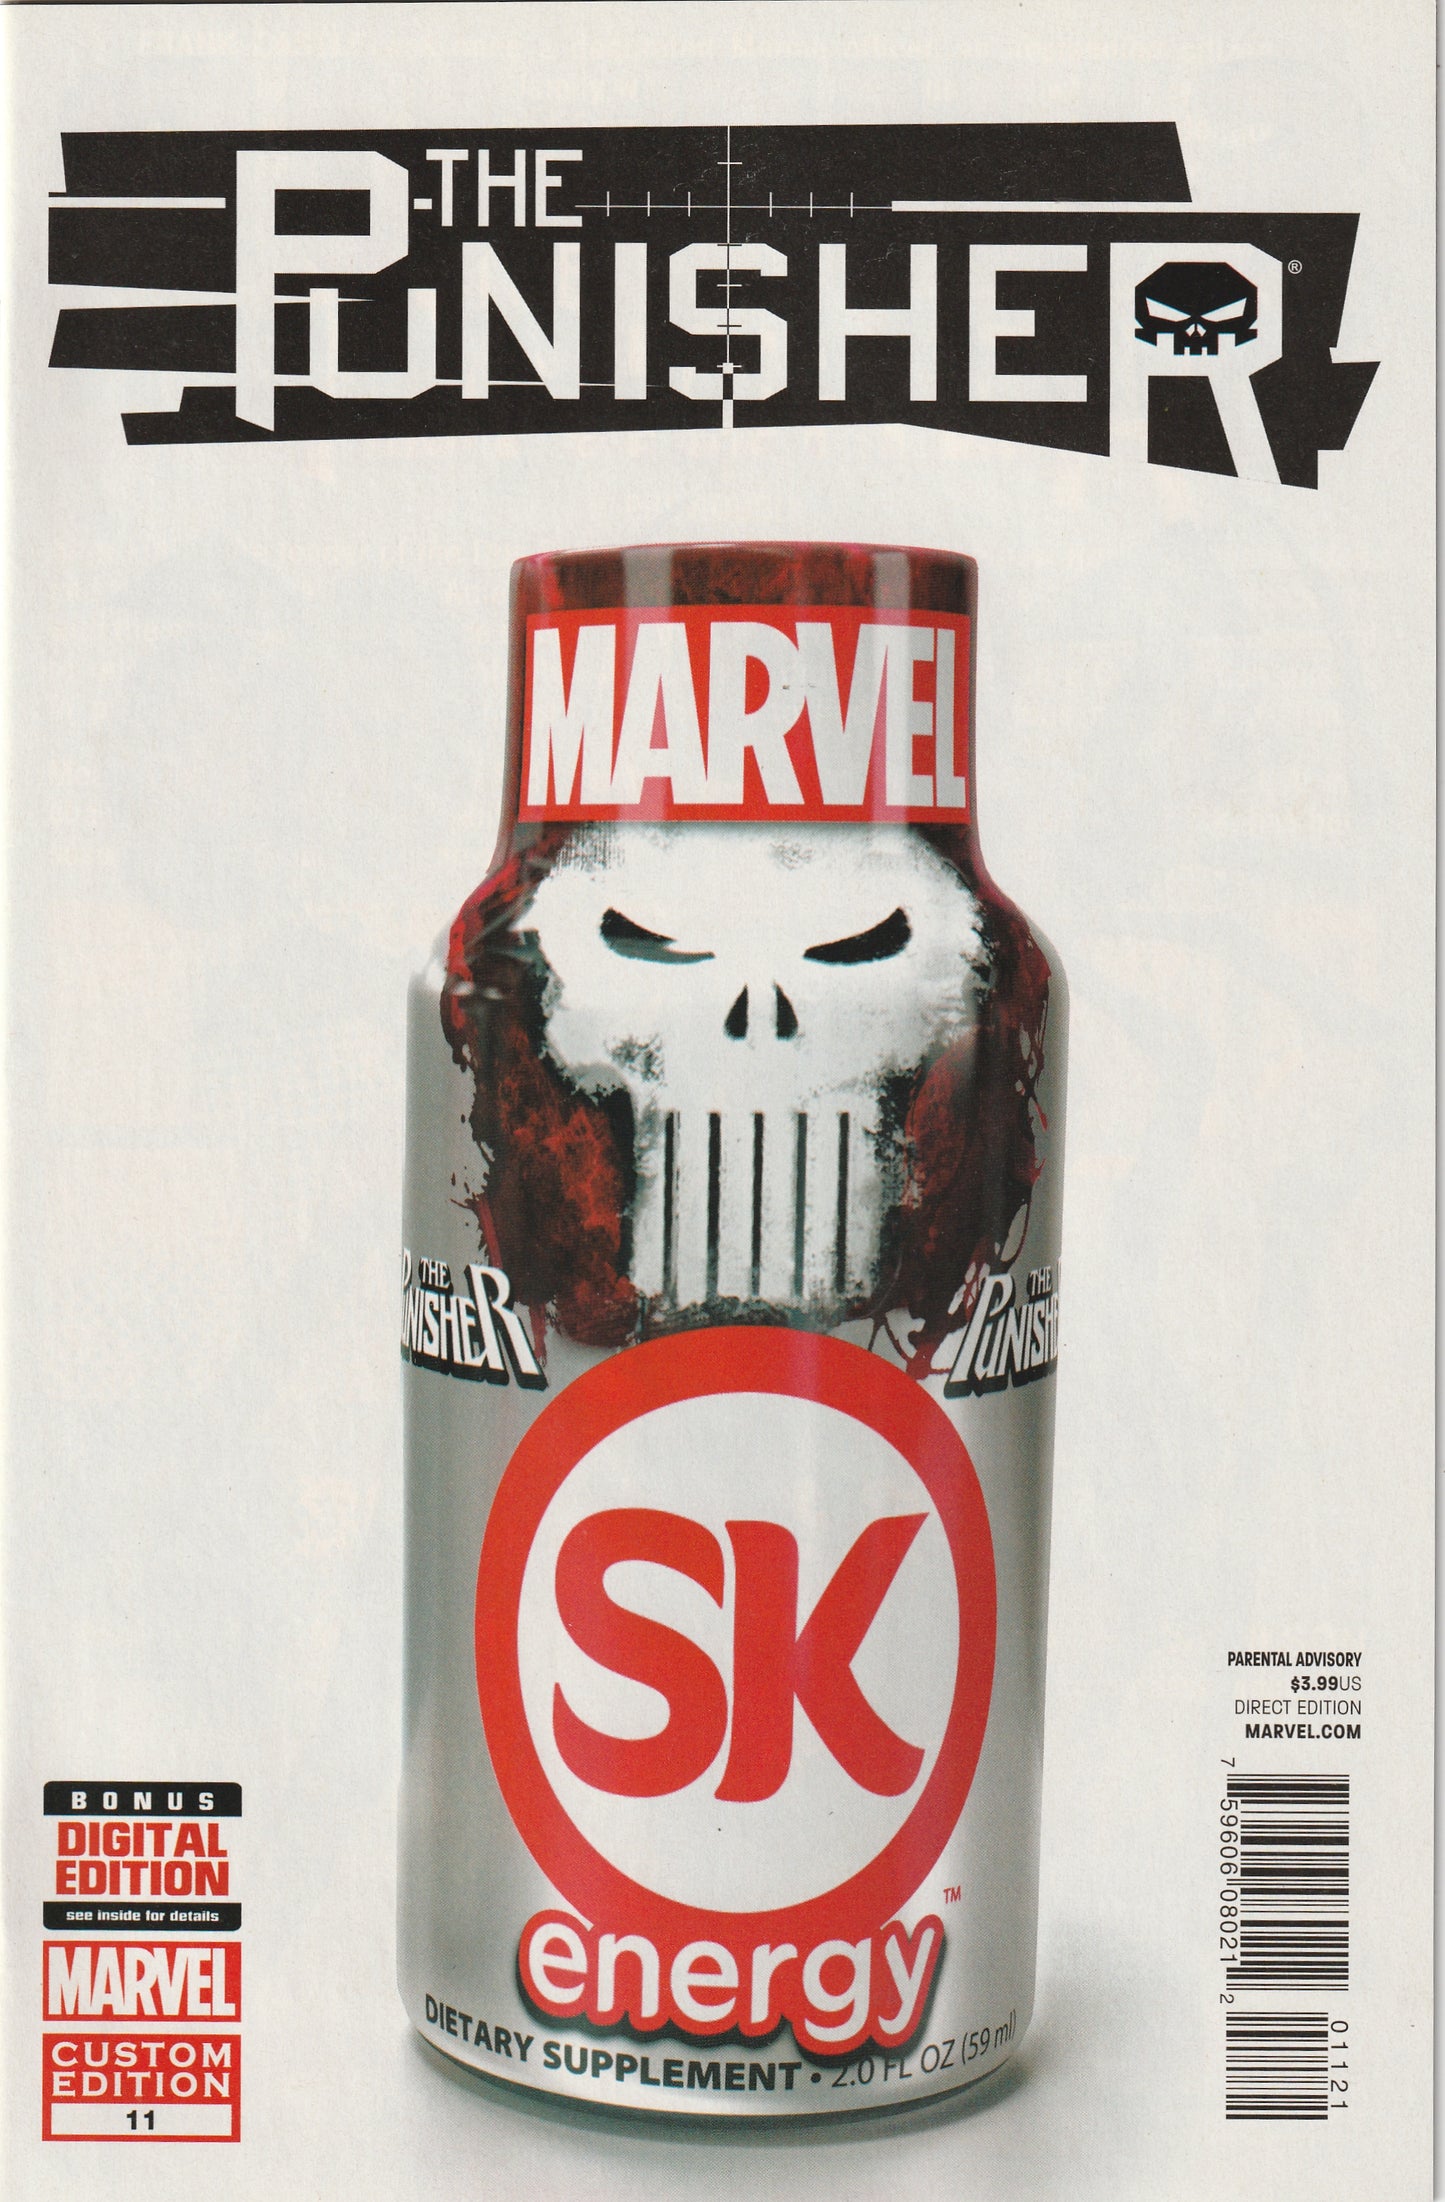 The Punisher #11 (NOW, 2014) - 1:25 Variant - Street King Energy Variant Cover